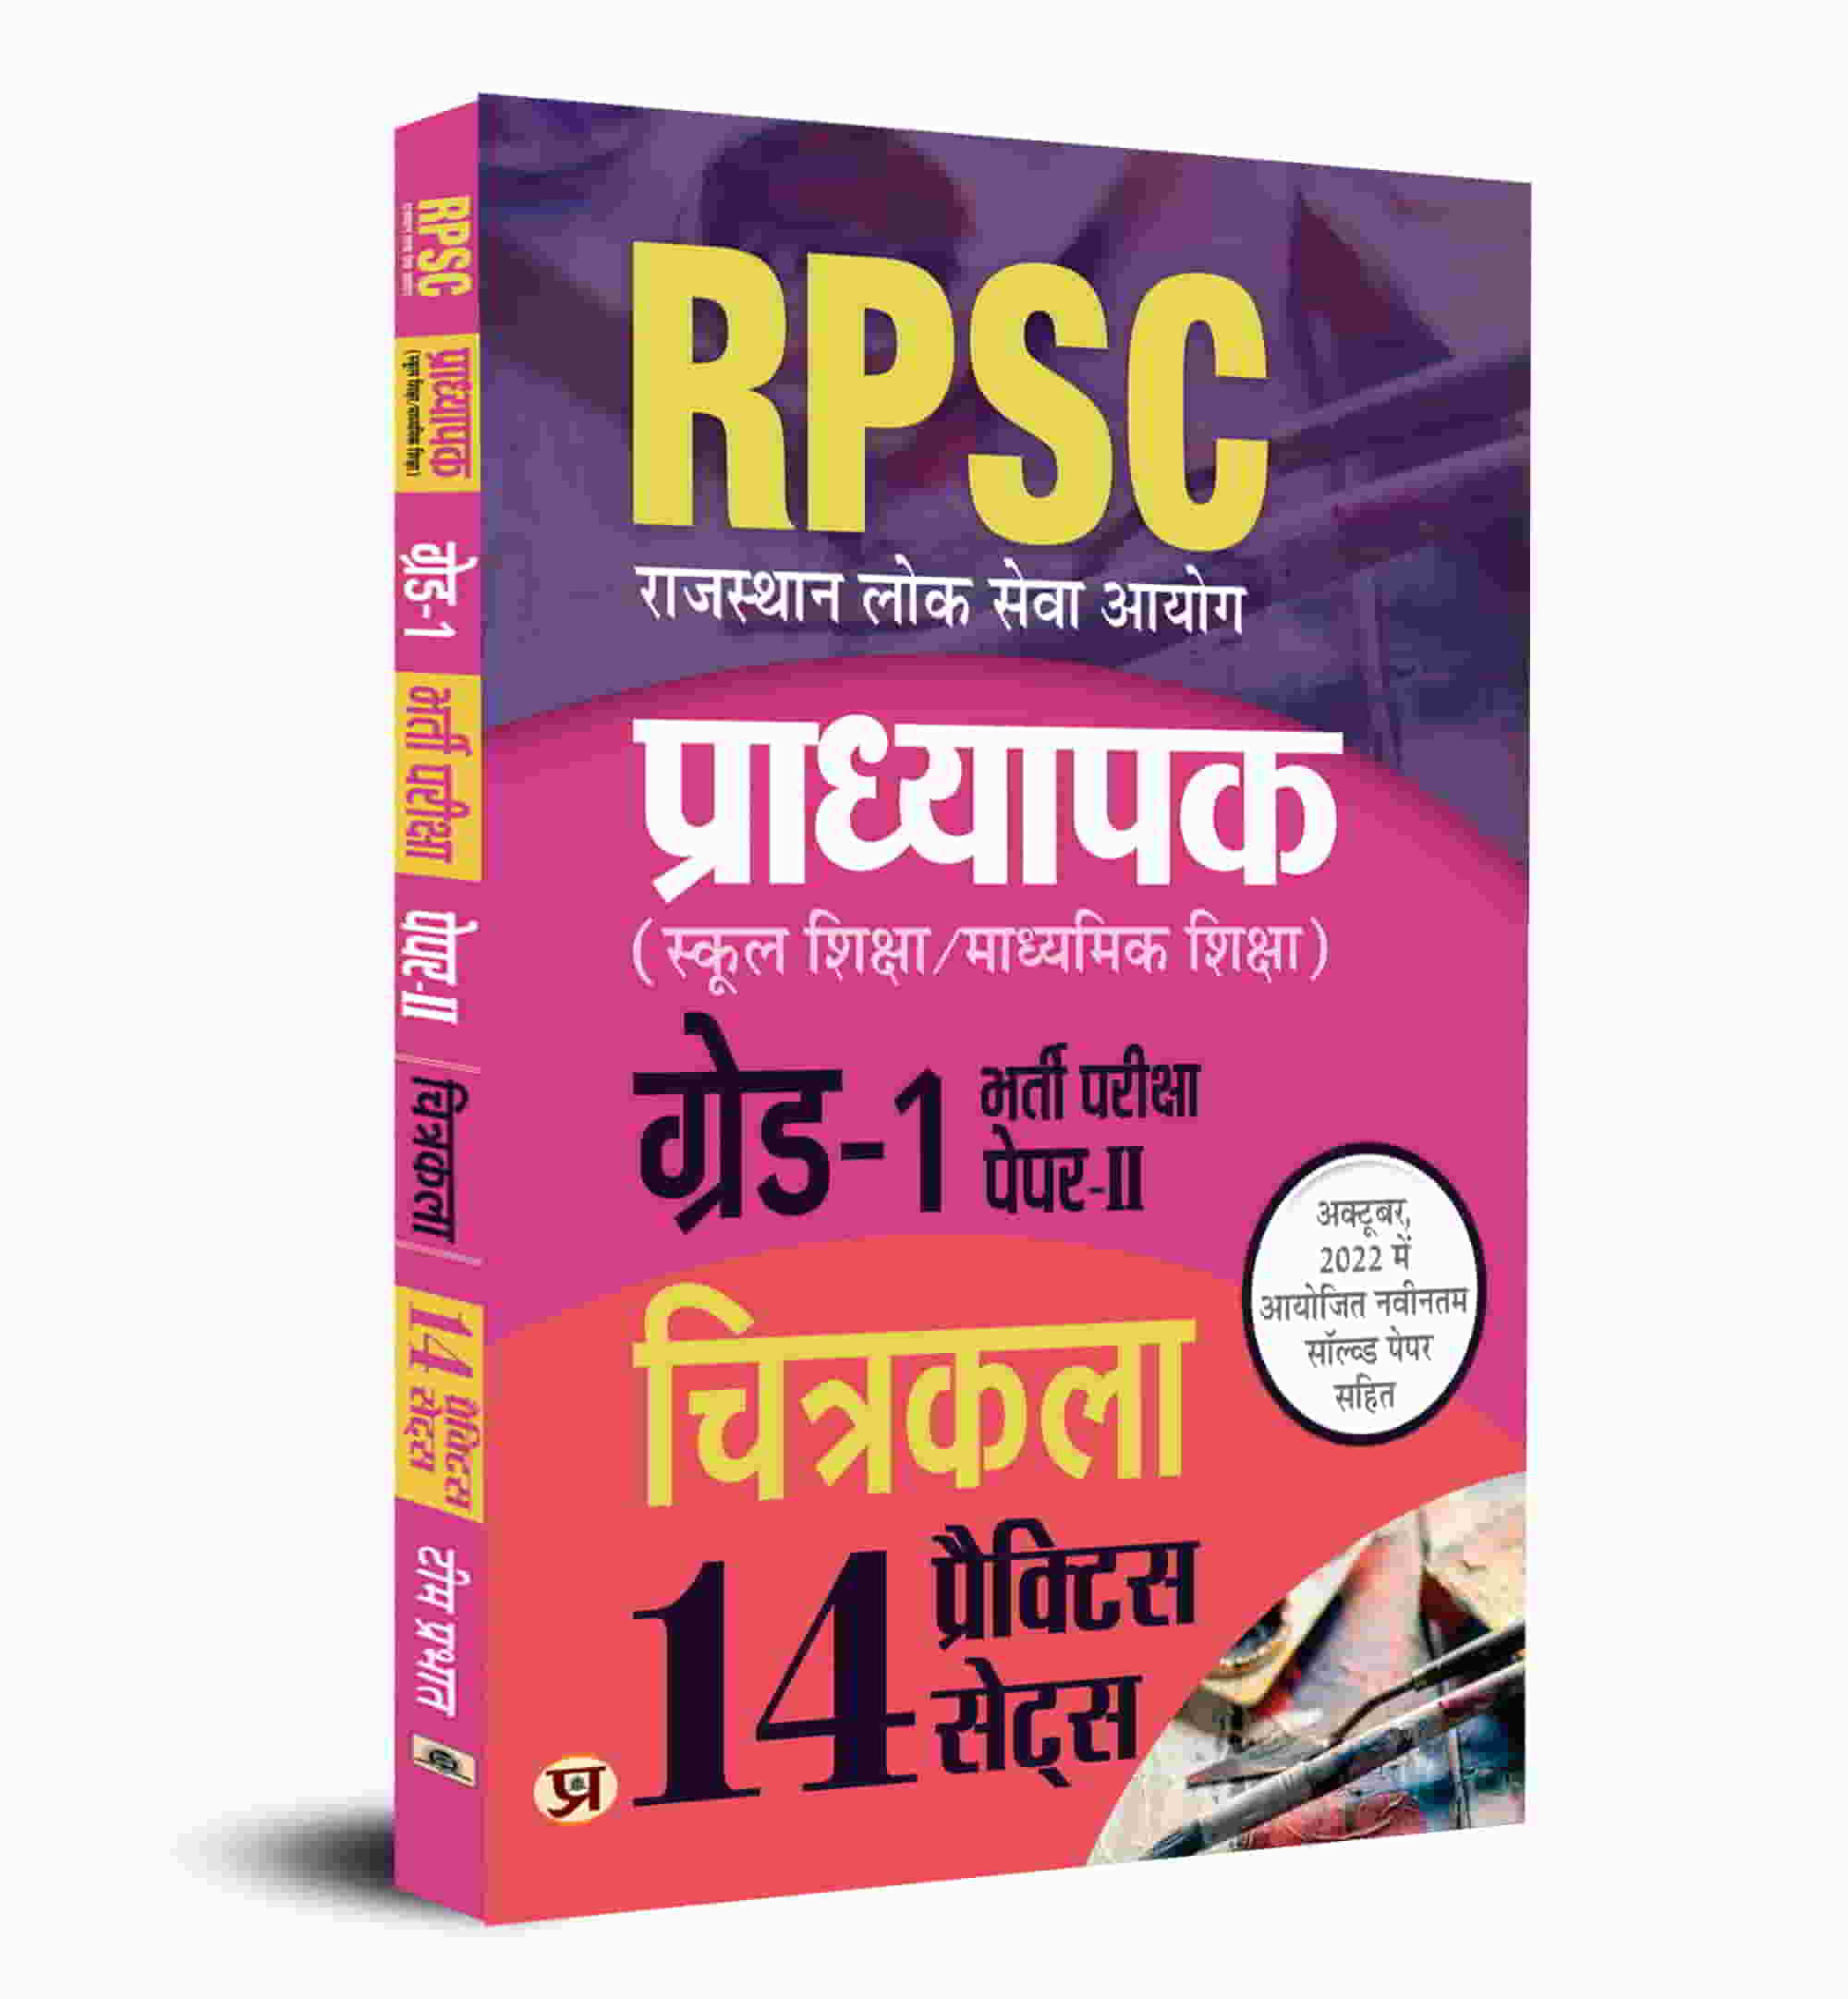 RPSC Arts Professor School Education / Secondary Education Recruitment Exam (PAPER-II ) Subject Arts Grade - 1 14 Practice Sets Book In Hindi